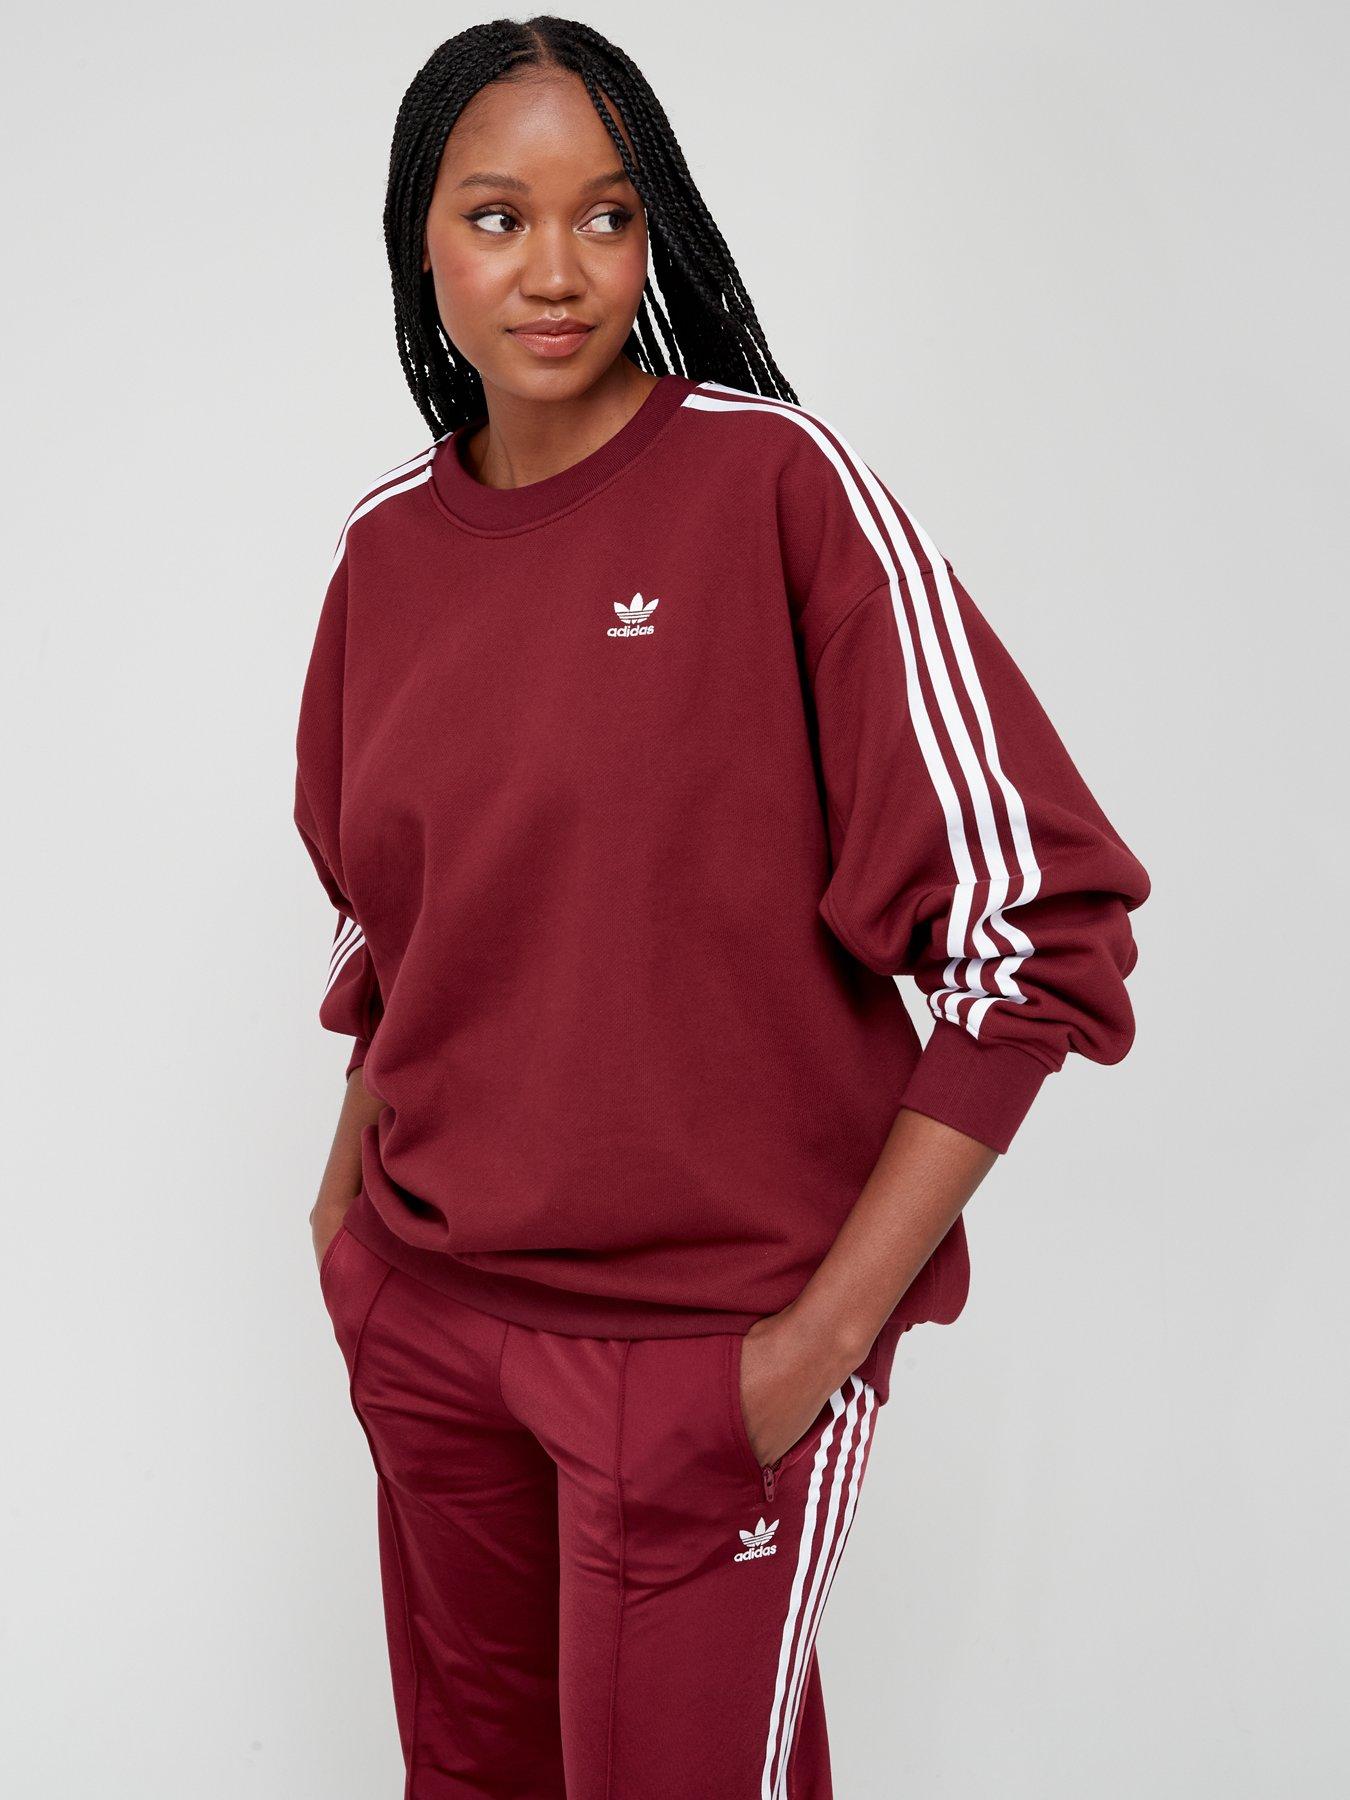 Womens sports clothing | & leisure | Adidas originals | www.littlewoods.com